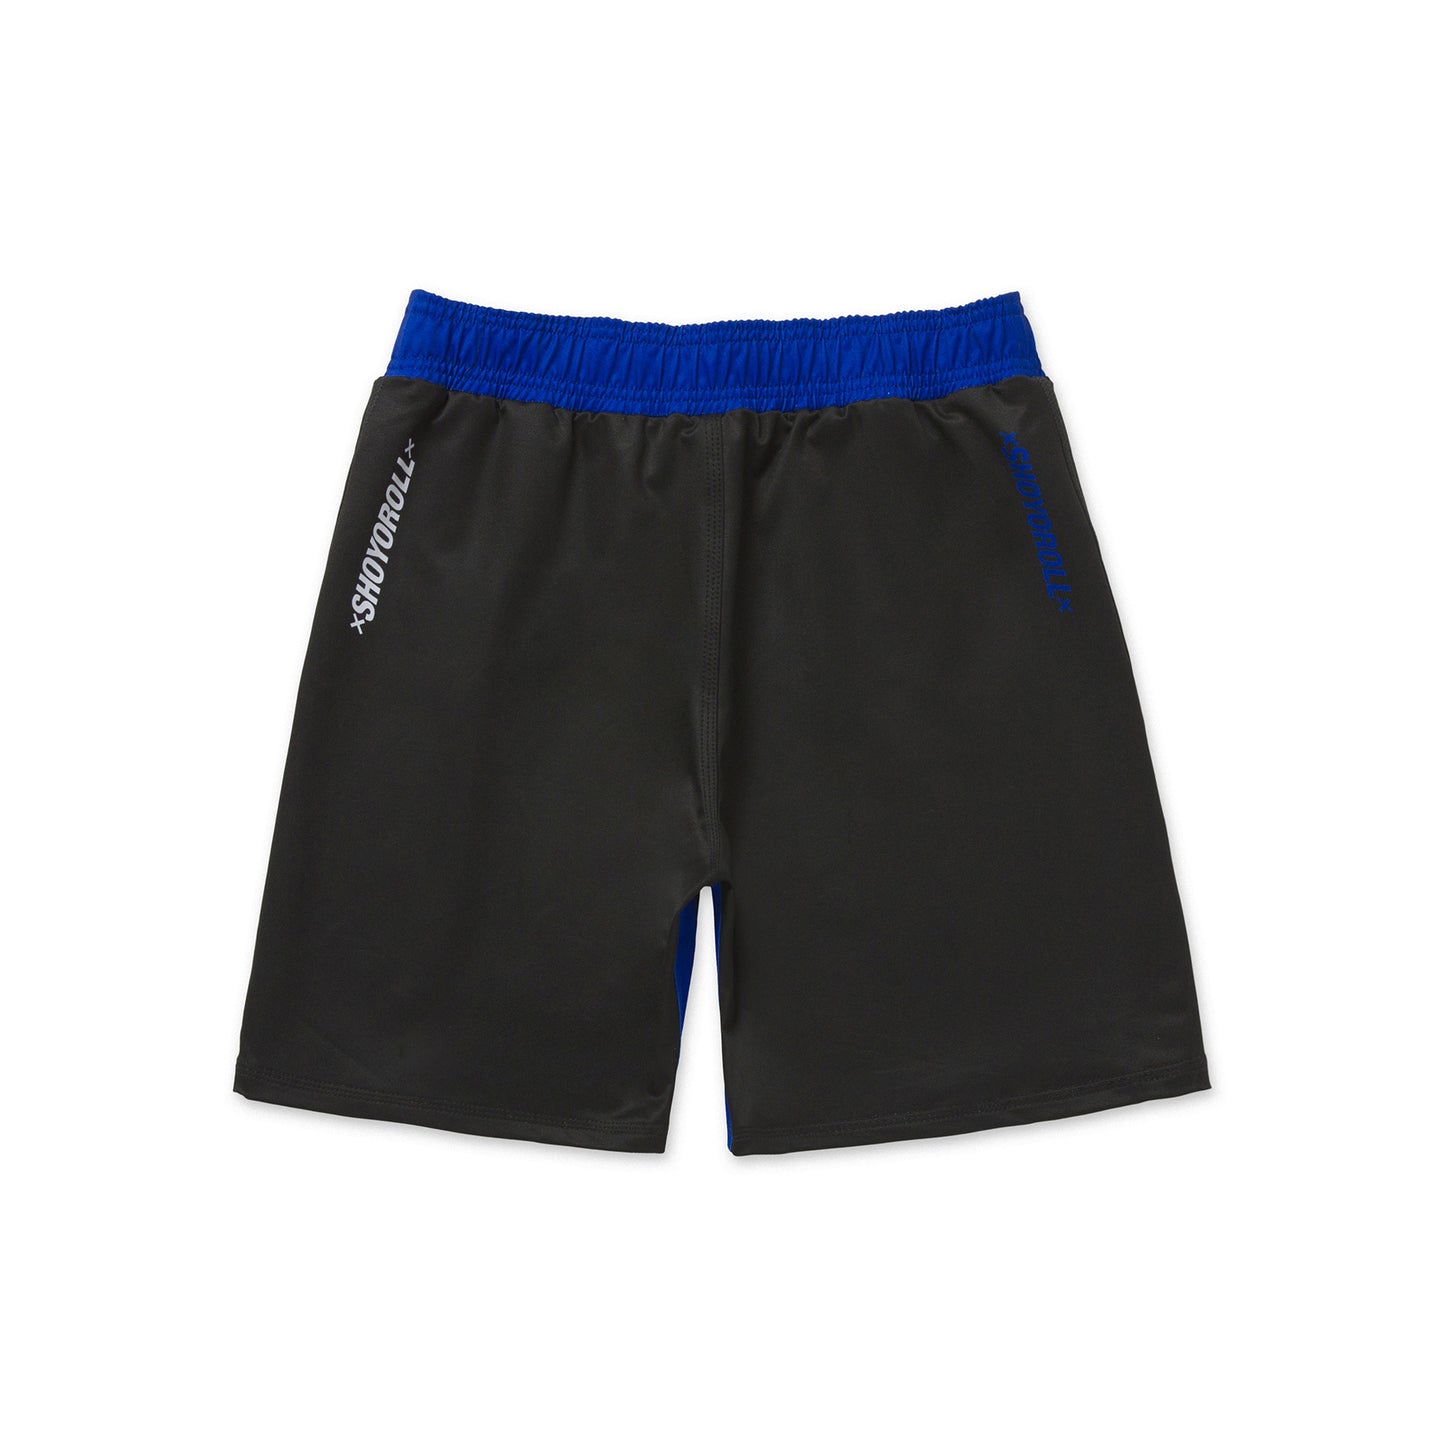 Azure Training Fitted Shorts